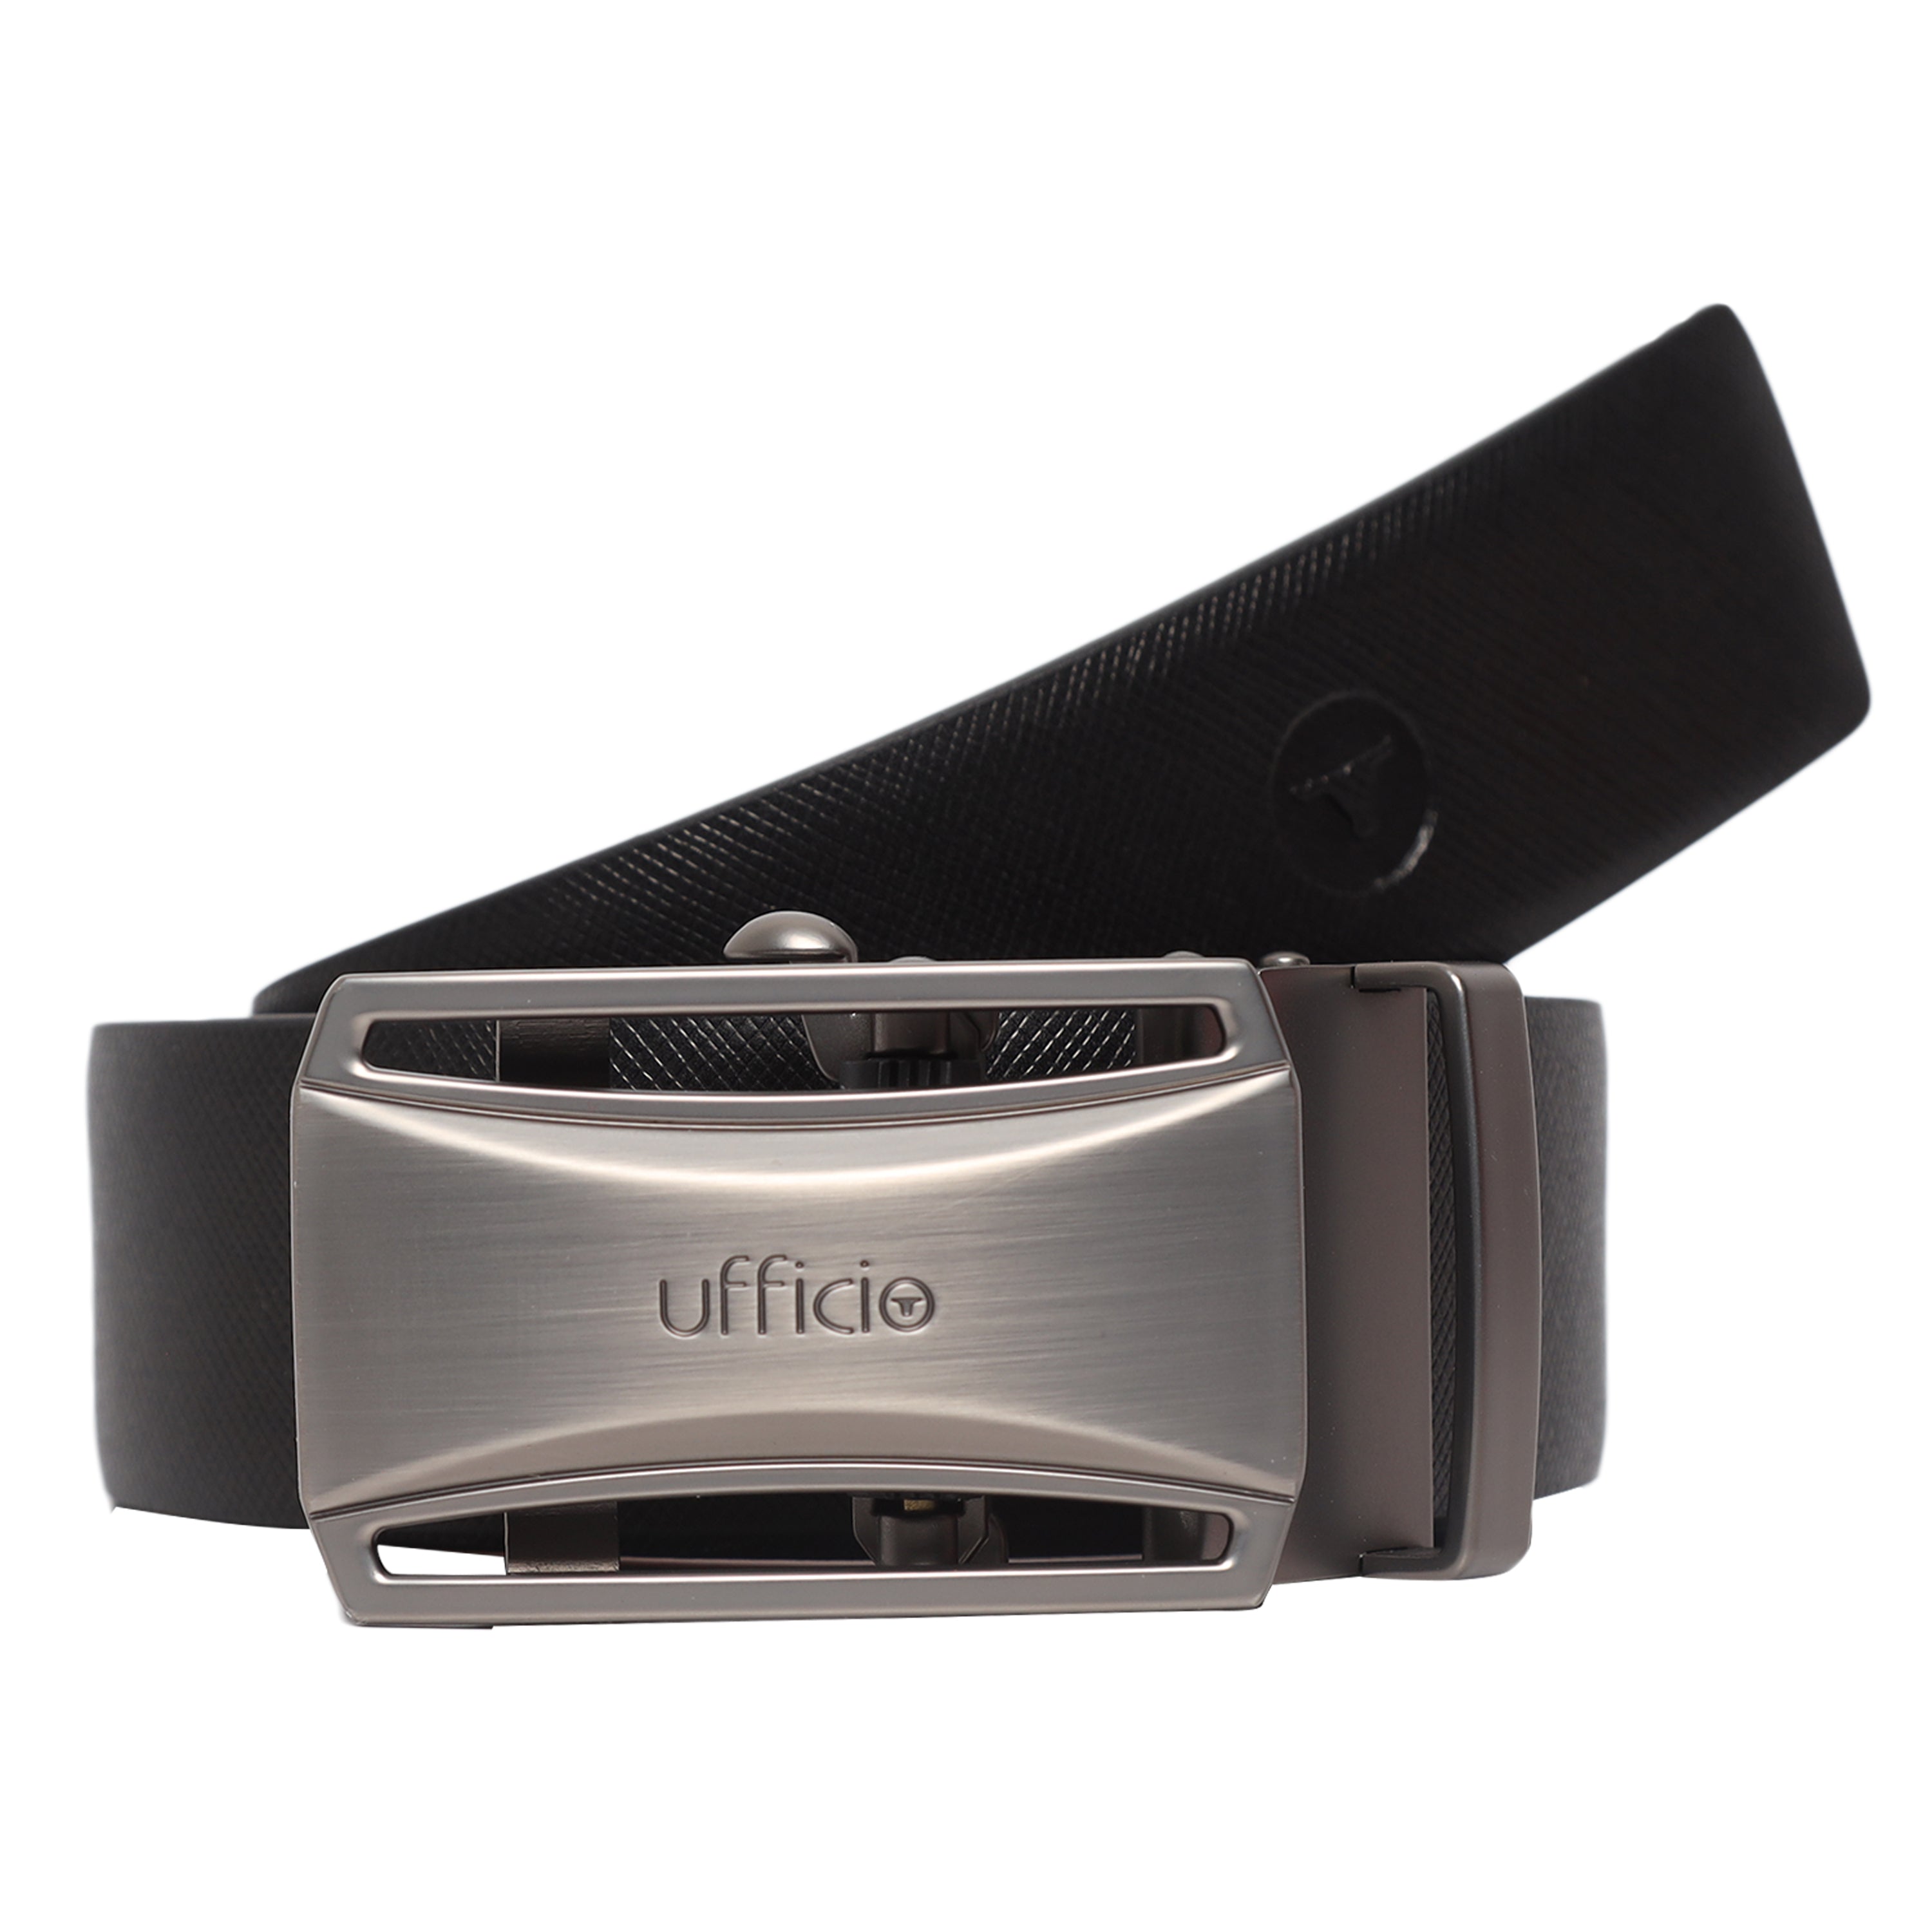 Ufficio Men's Genuine Leather Reversible Auto Lock Belt (Formal, Black/Tan)